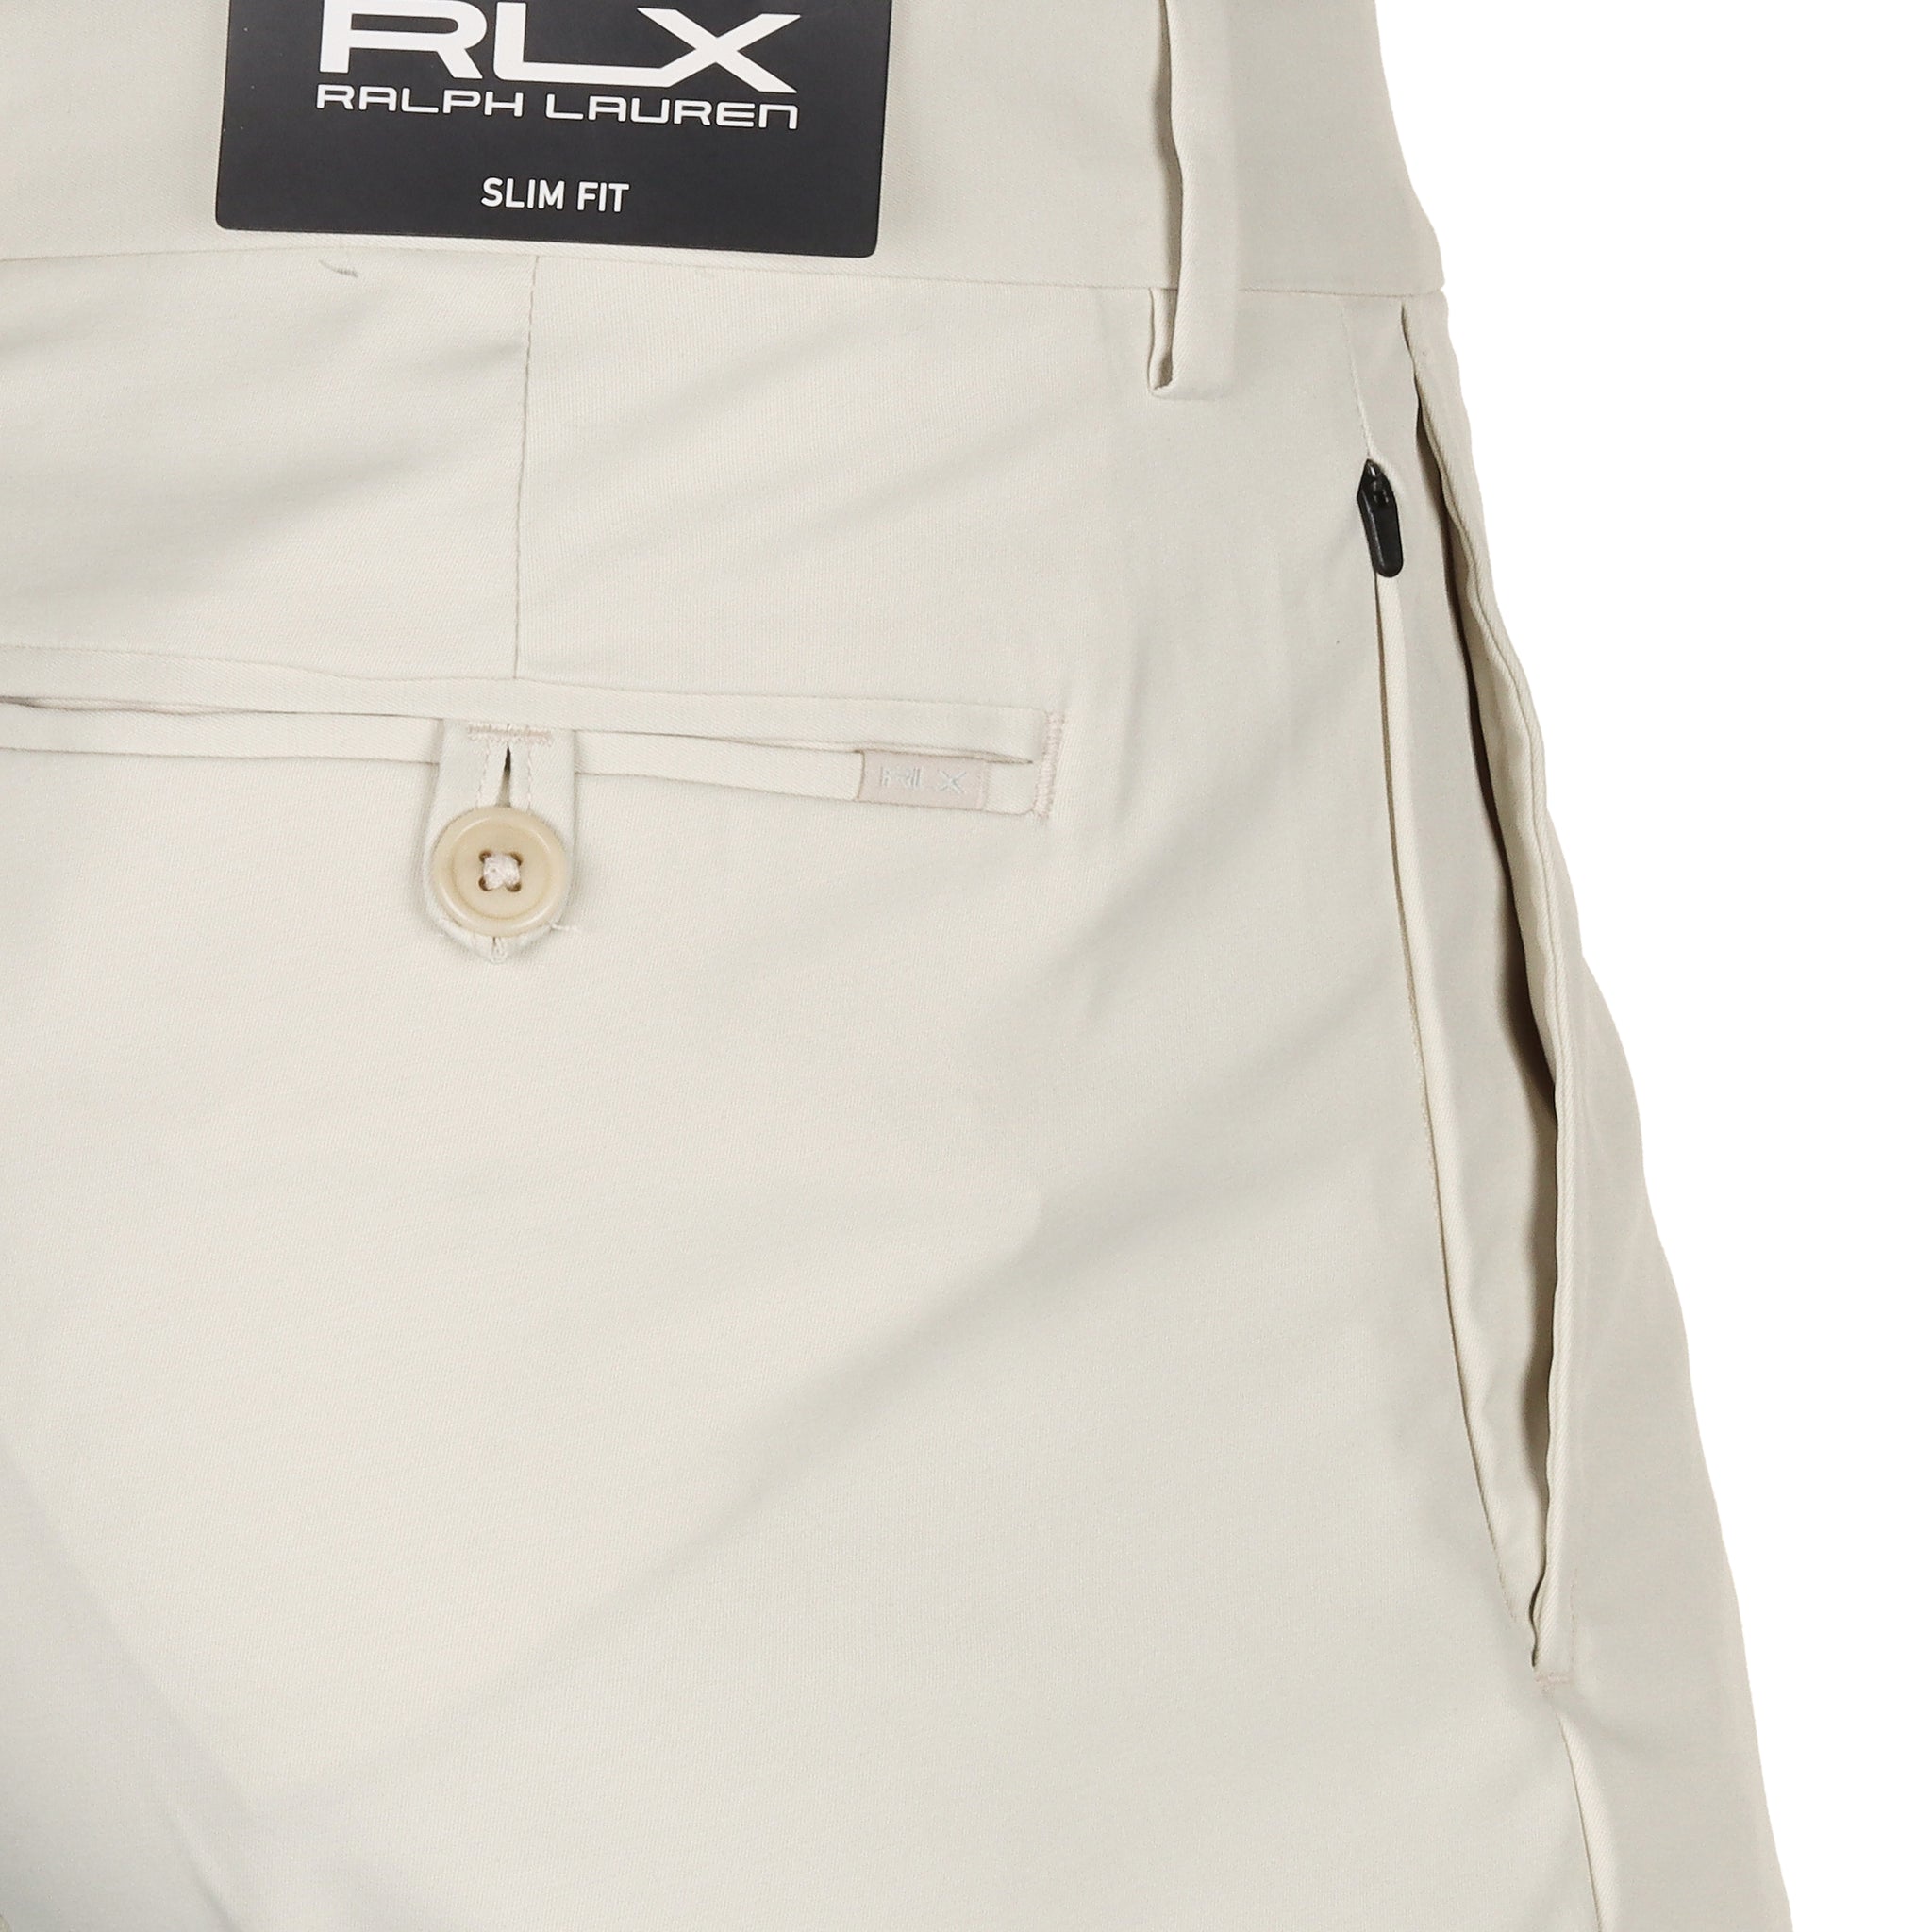 RLX Ralph Lauren Slim Fit Pants